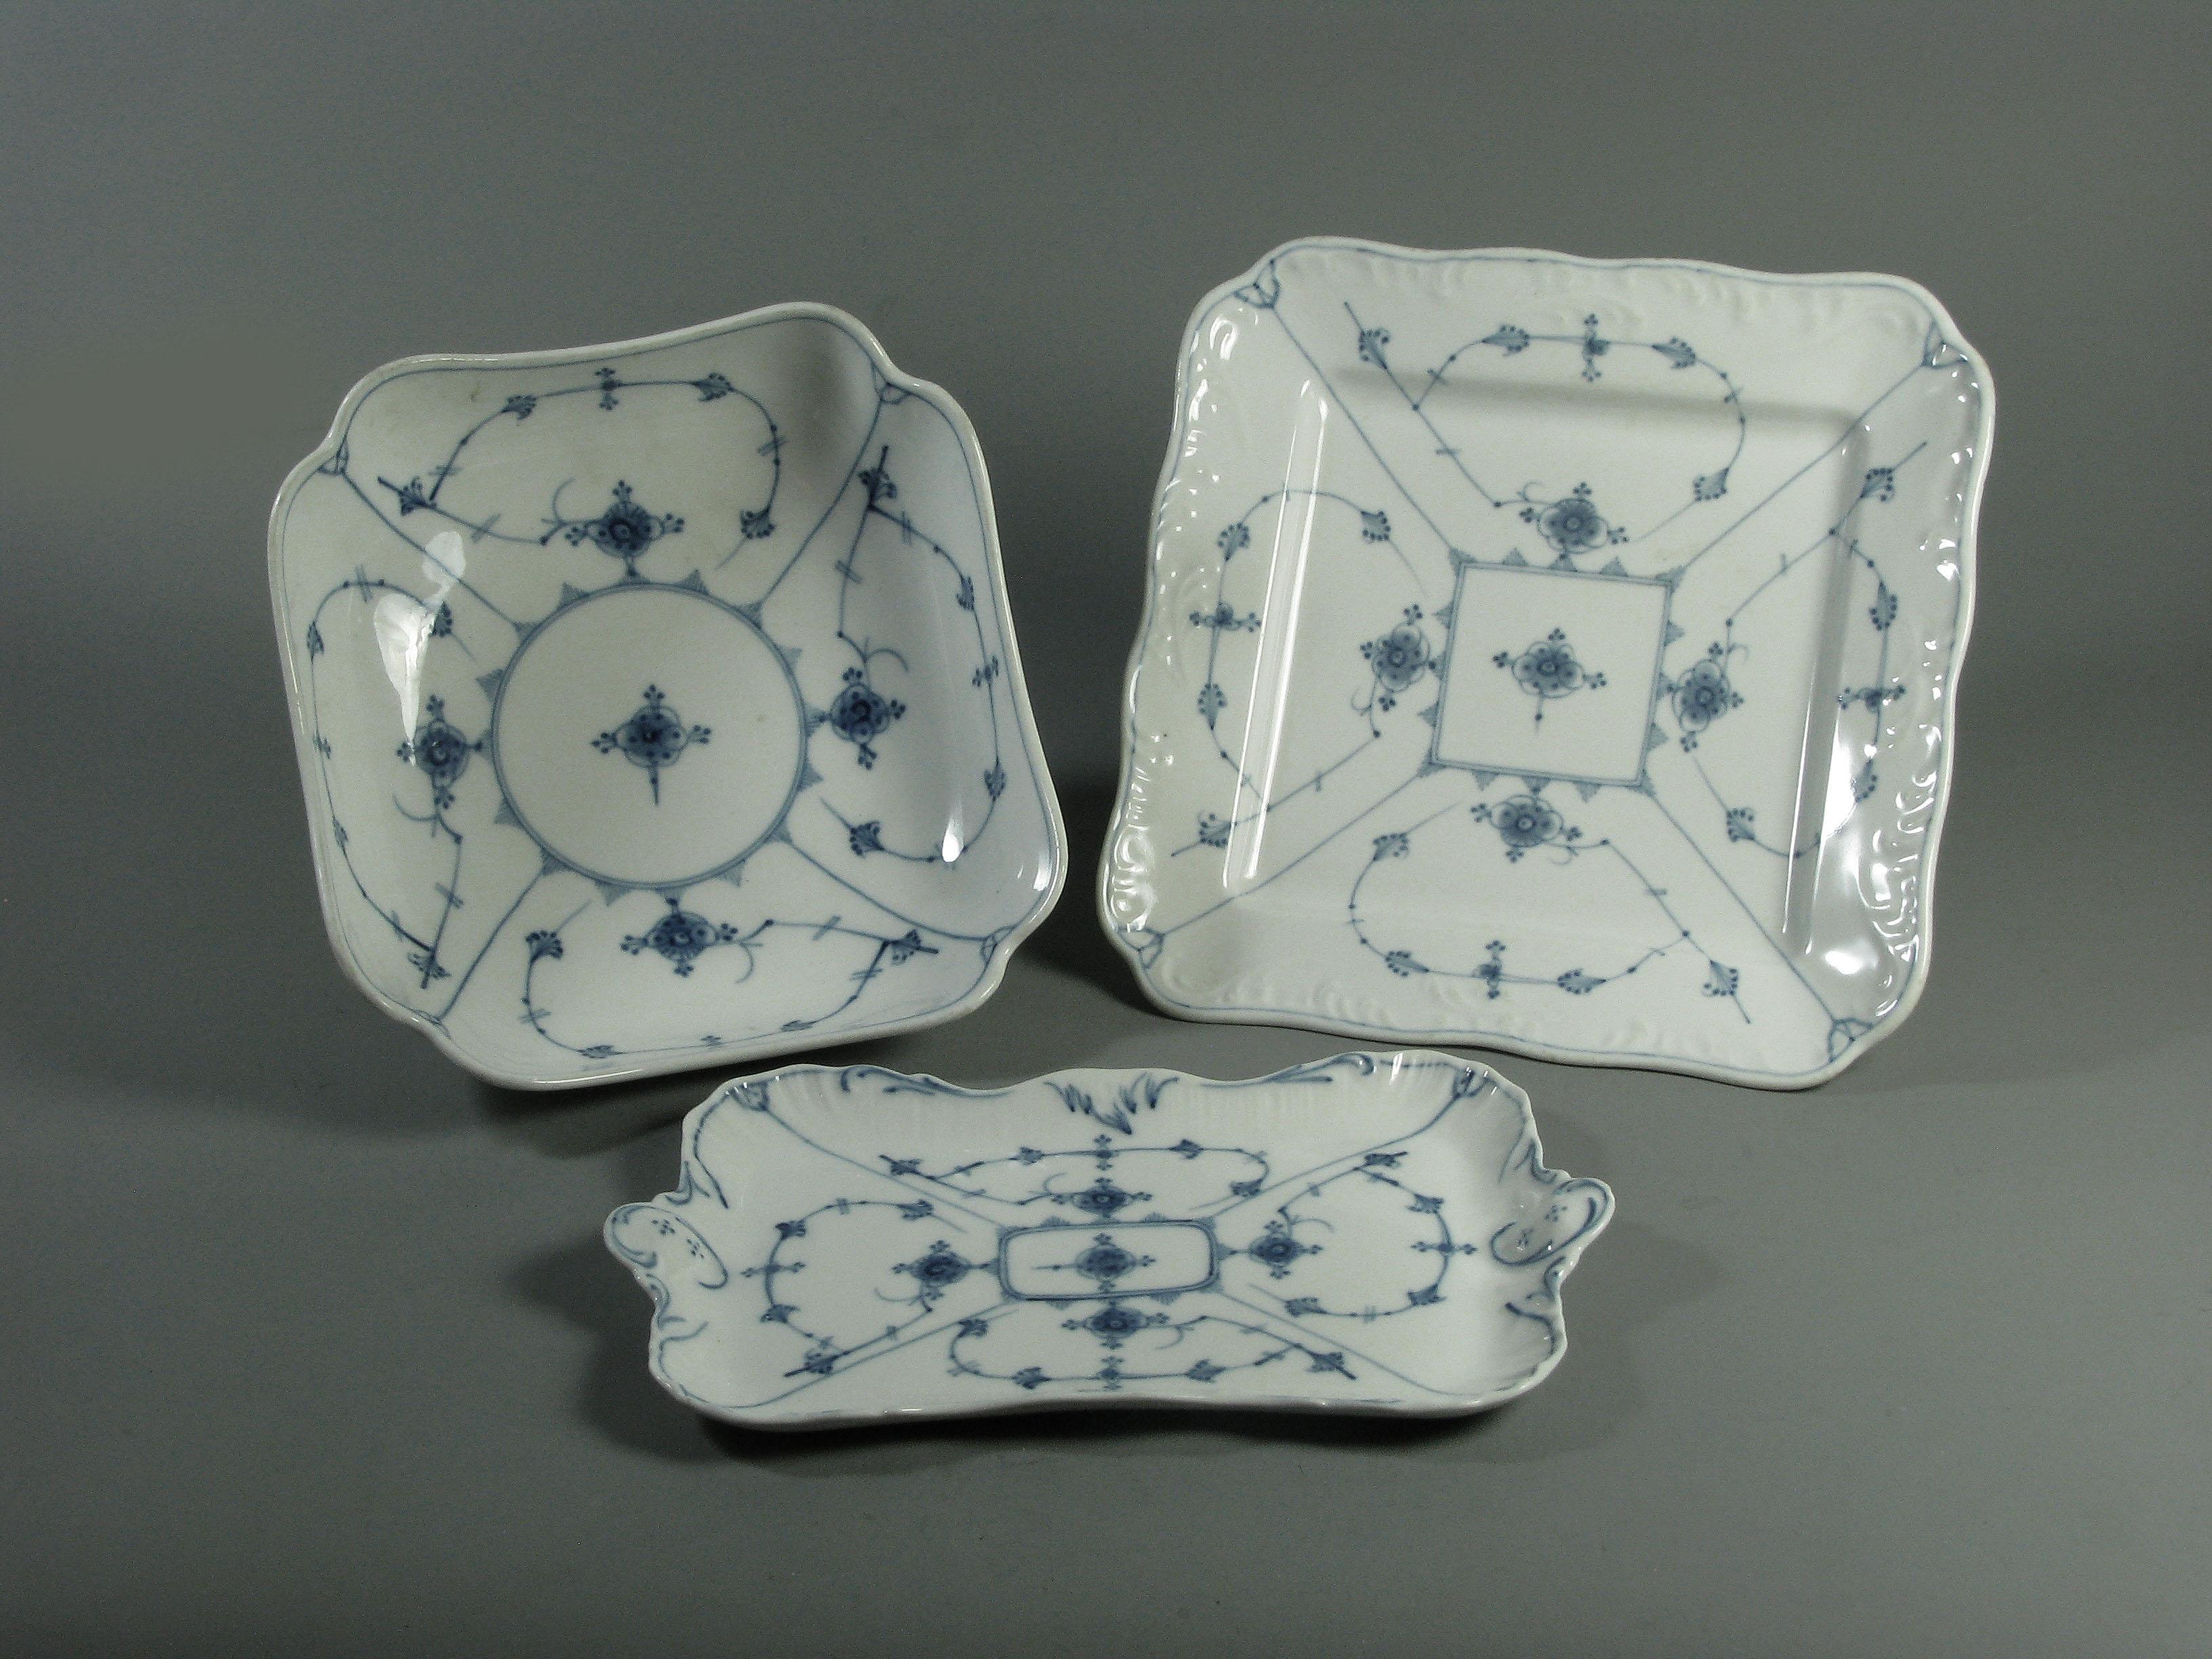 Porcelain 3 Porsgrund Serving Dishes “Bogstad Straw” Pattern Close to Royal Copenhagen For Sale